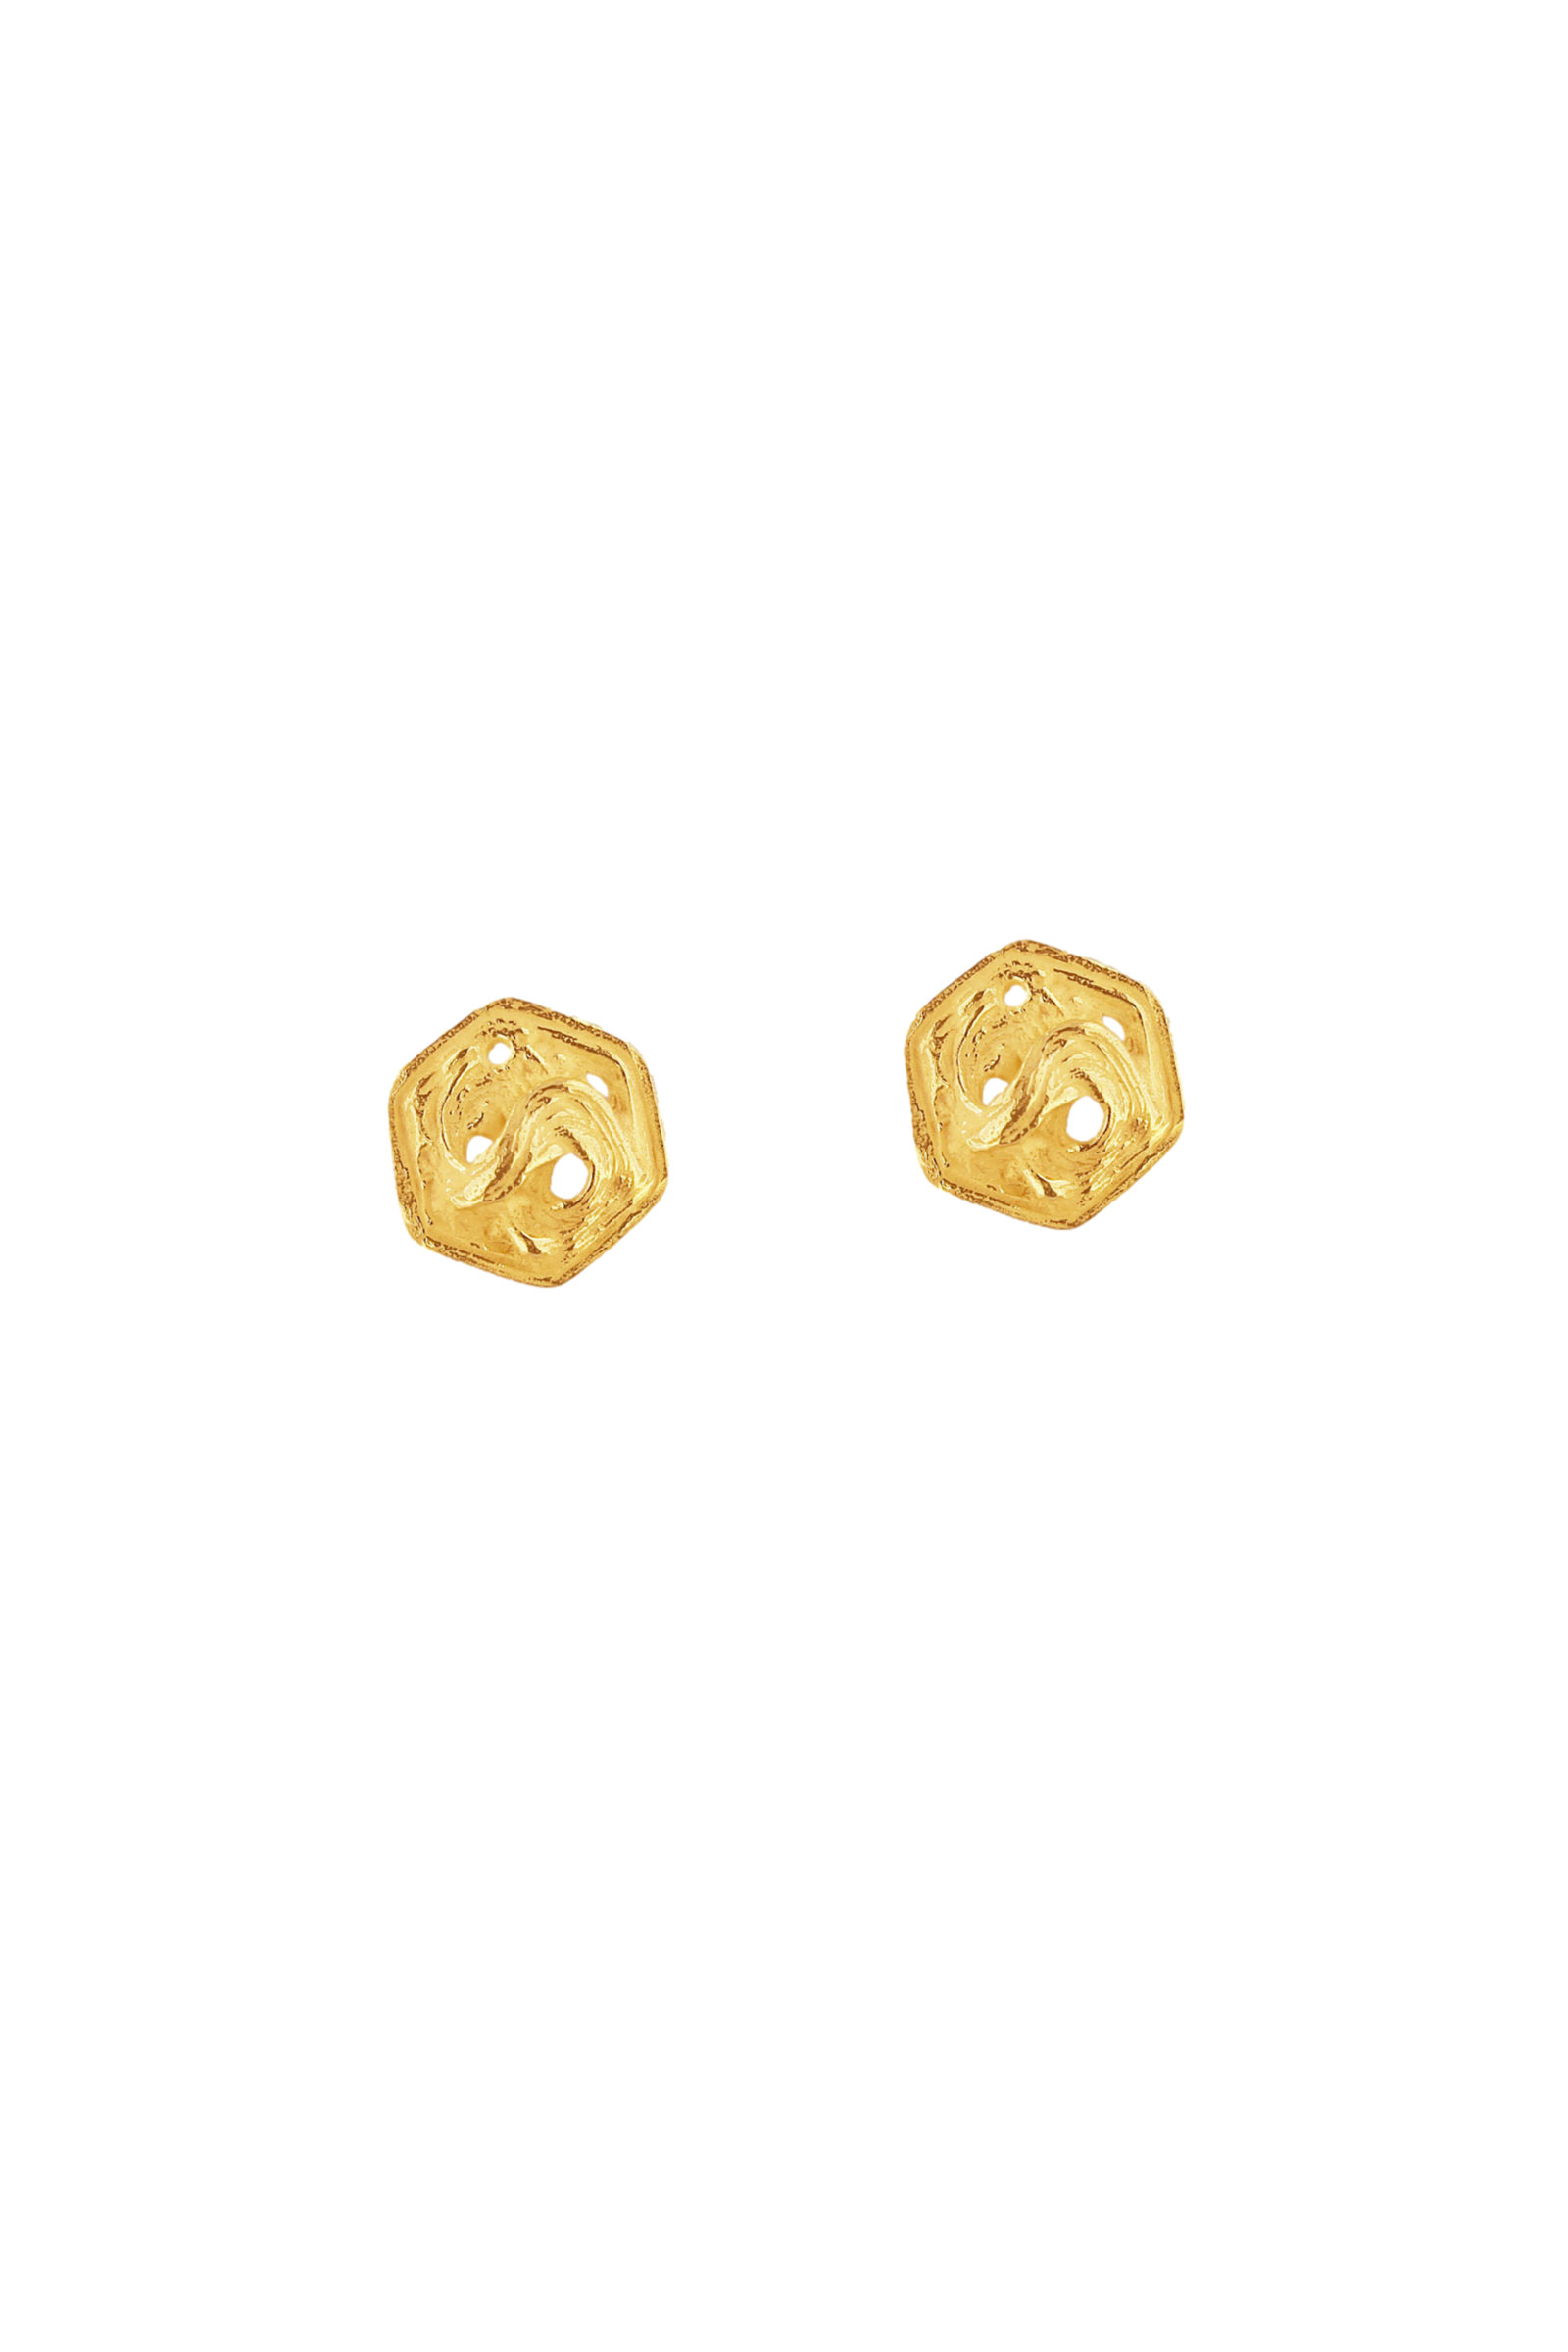 SD152B-18-Kt-Yellow-Gold-Button-Pierced-Earrings-1